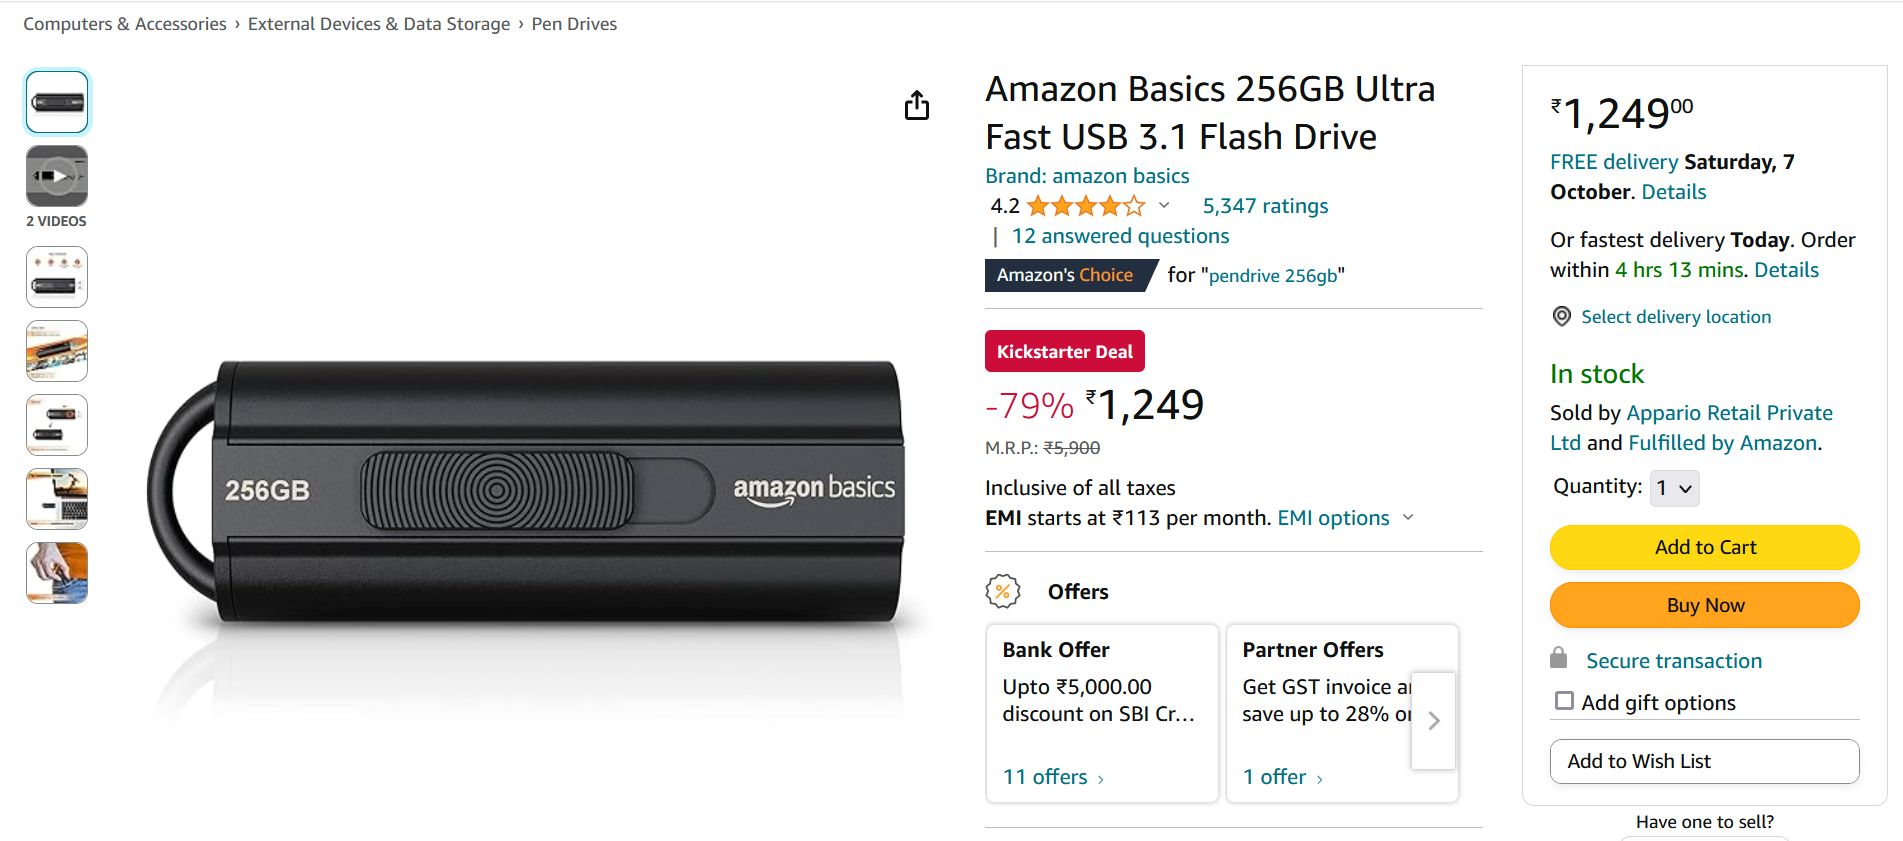 Amazon Basics 256GB Ultra Fast USB 3.1 Flash Drive